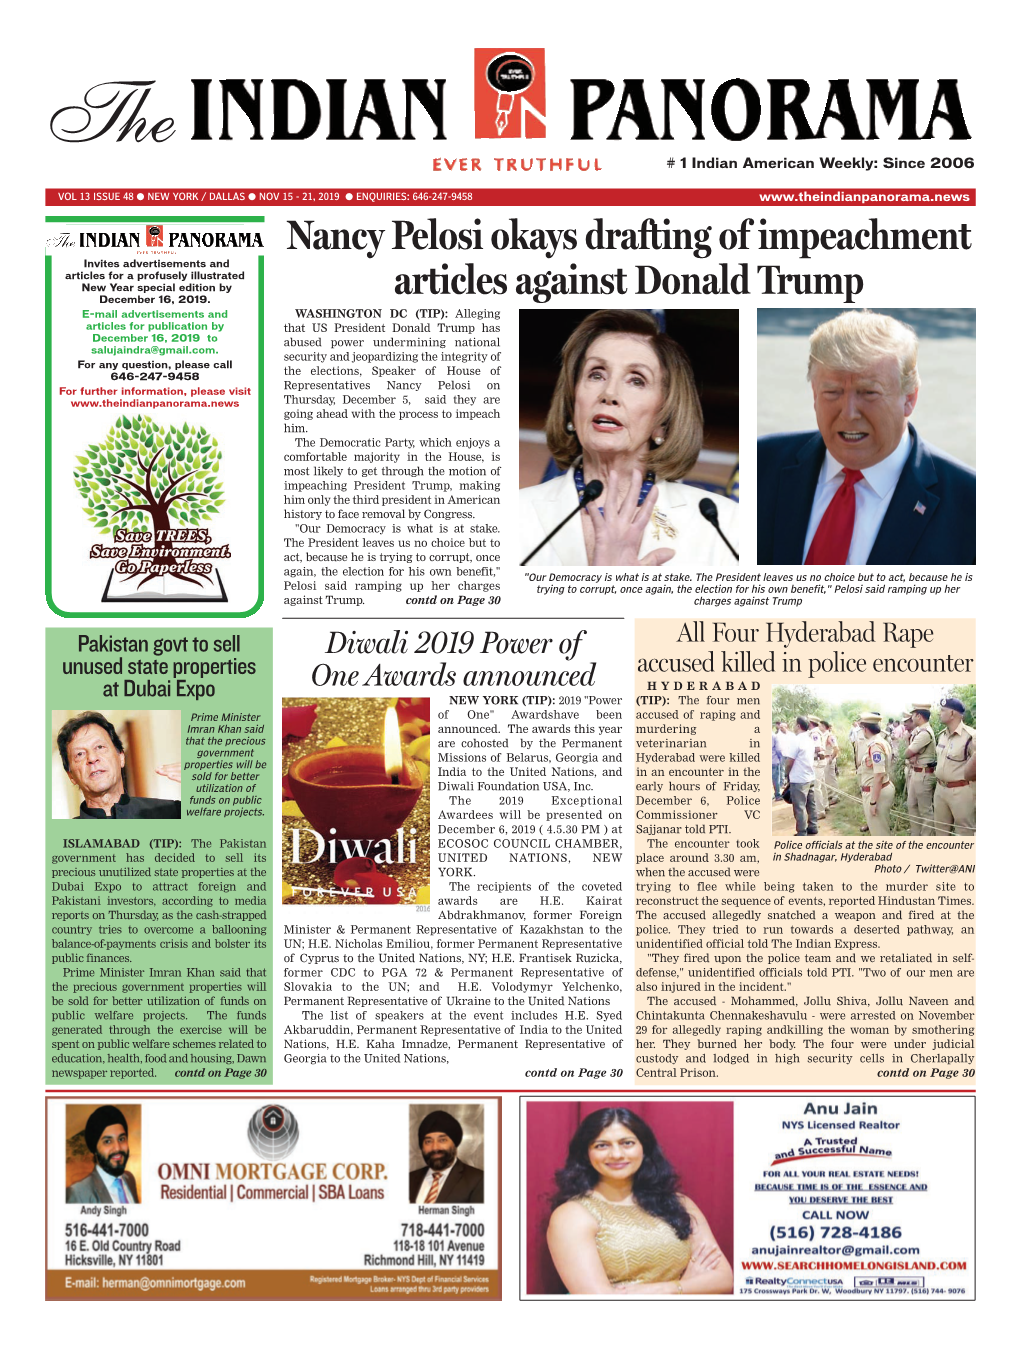 Nancy Pelosi Okays Drafting of Impeachment Articles Against Donald Trump